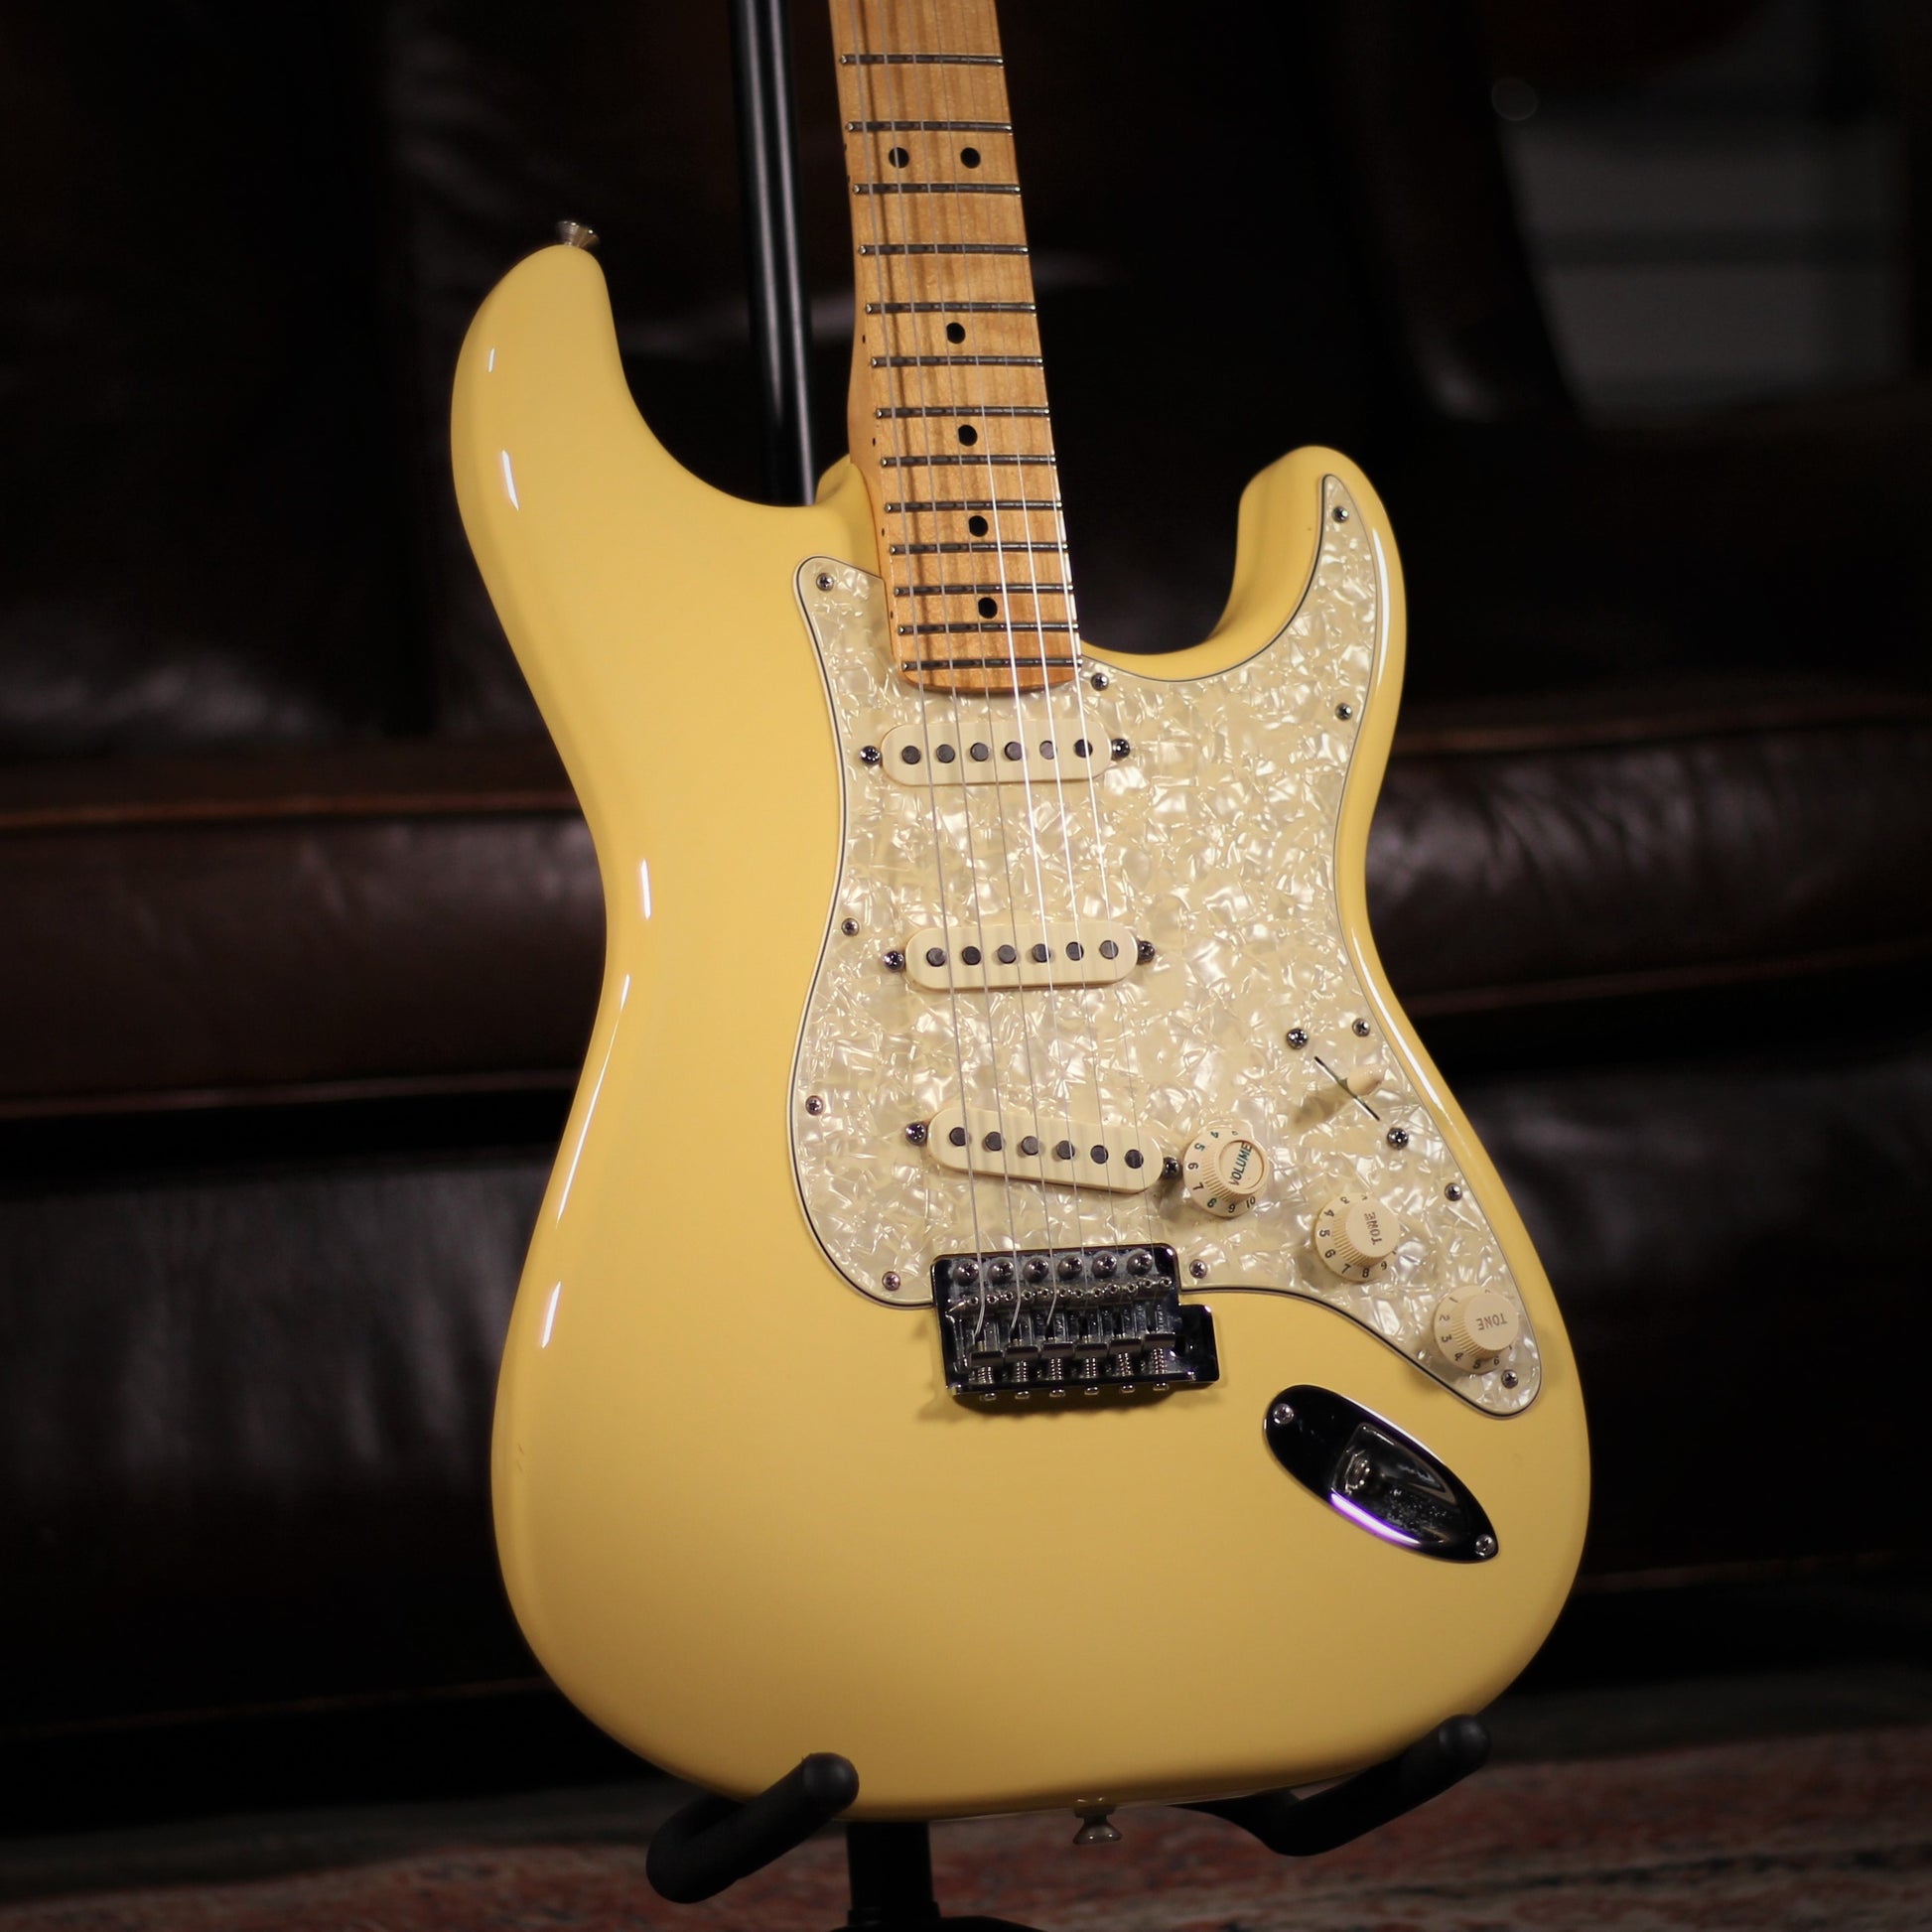 USED - Fender Roadhouse Stratocaster angled